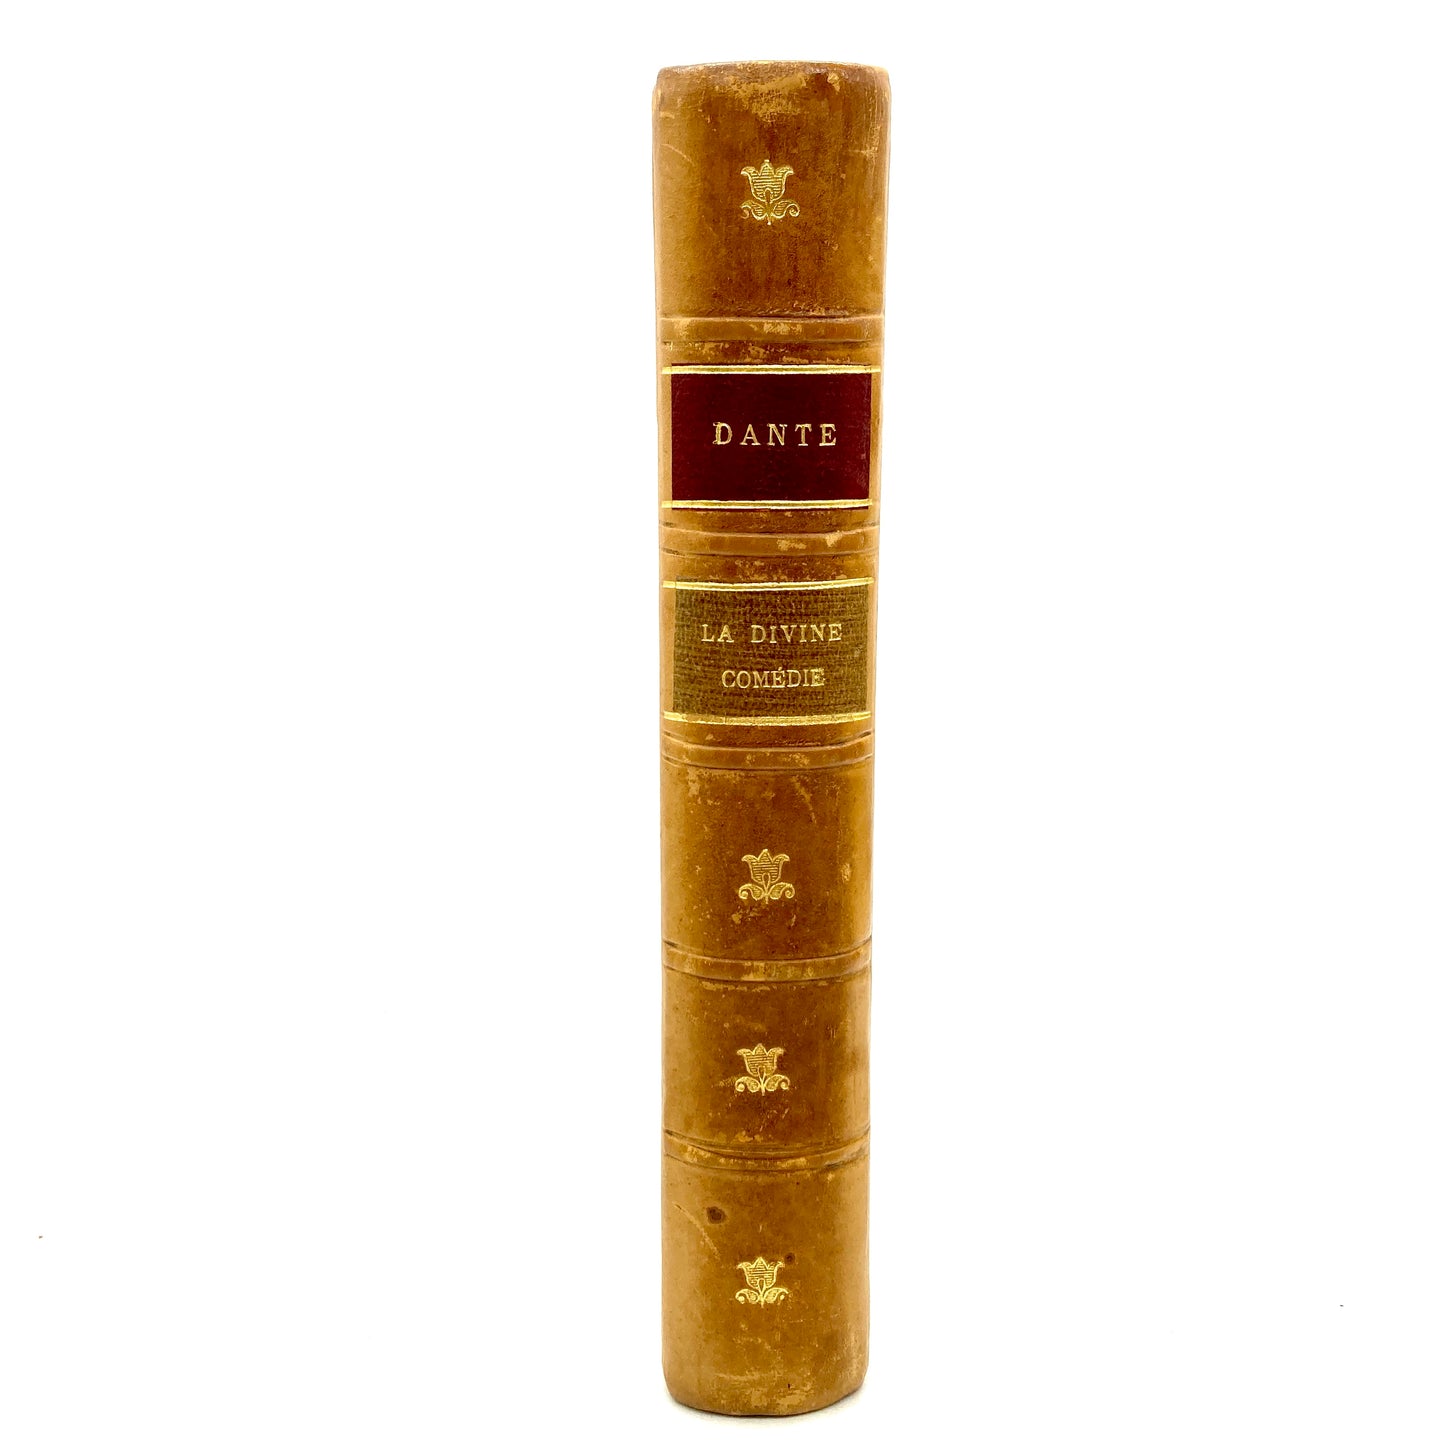 ALIGHIERI, Dante "La Divine Comedie" [Garnier Freres, n.d./c1890s]